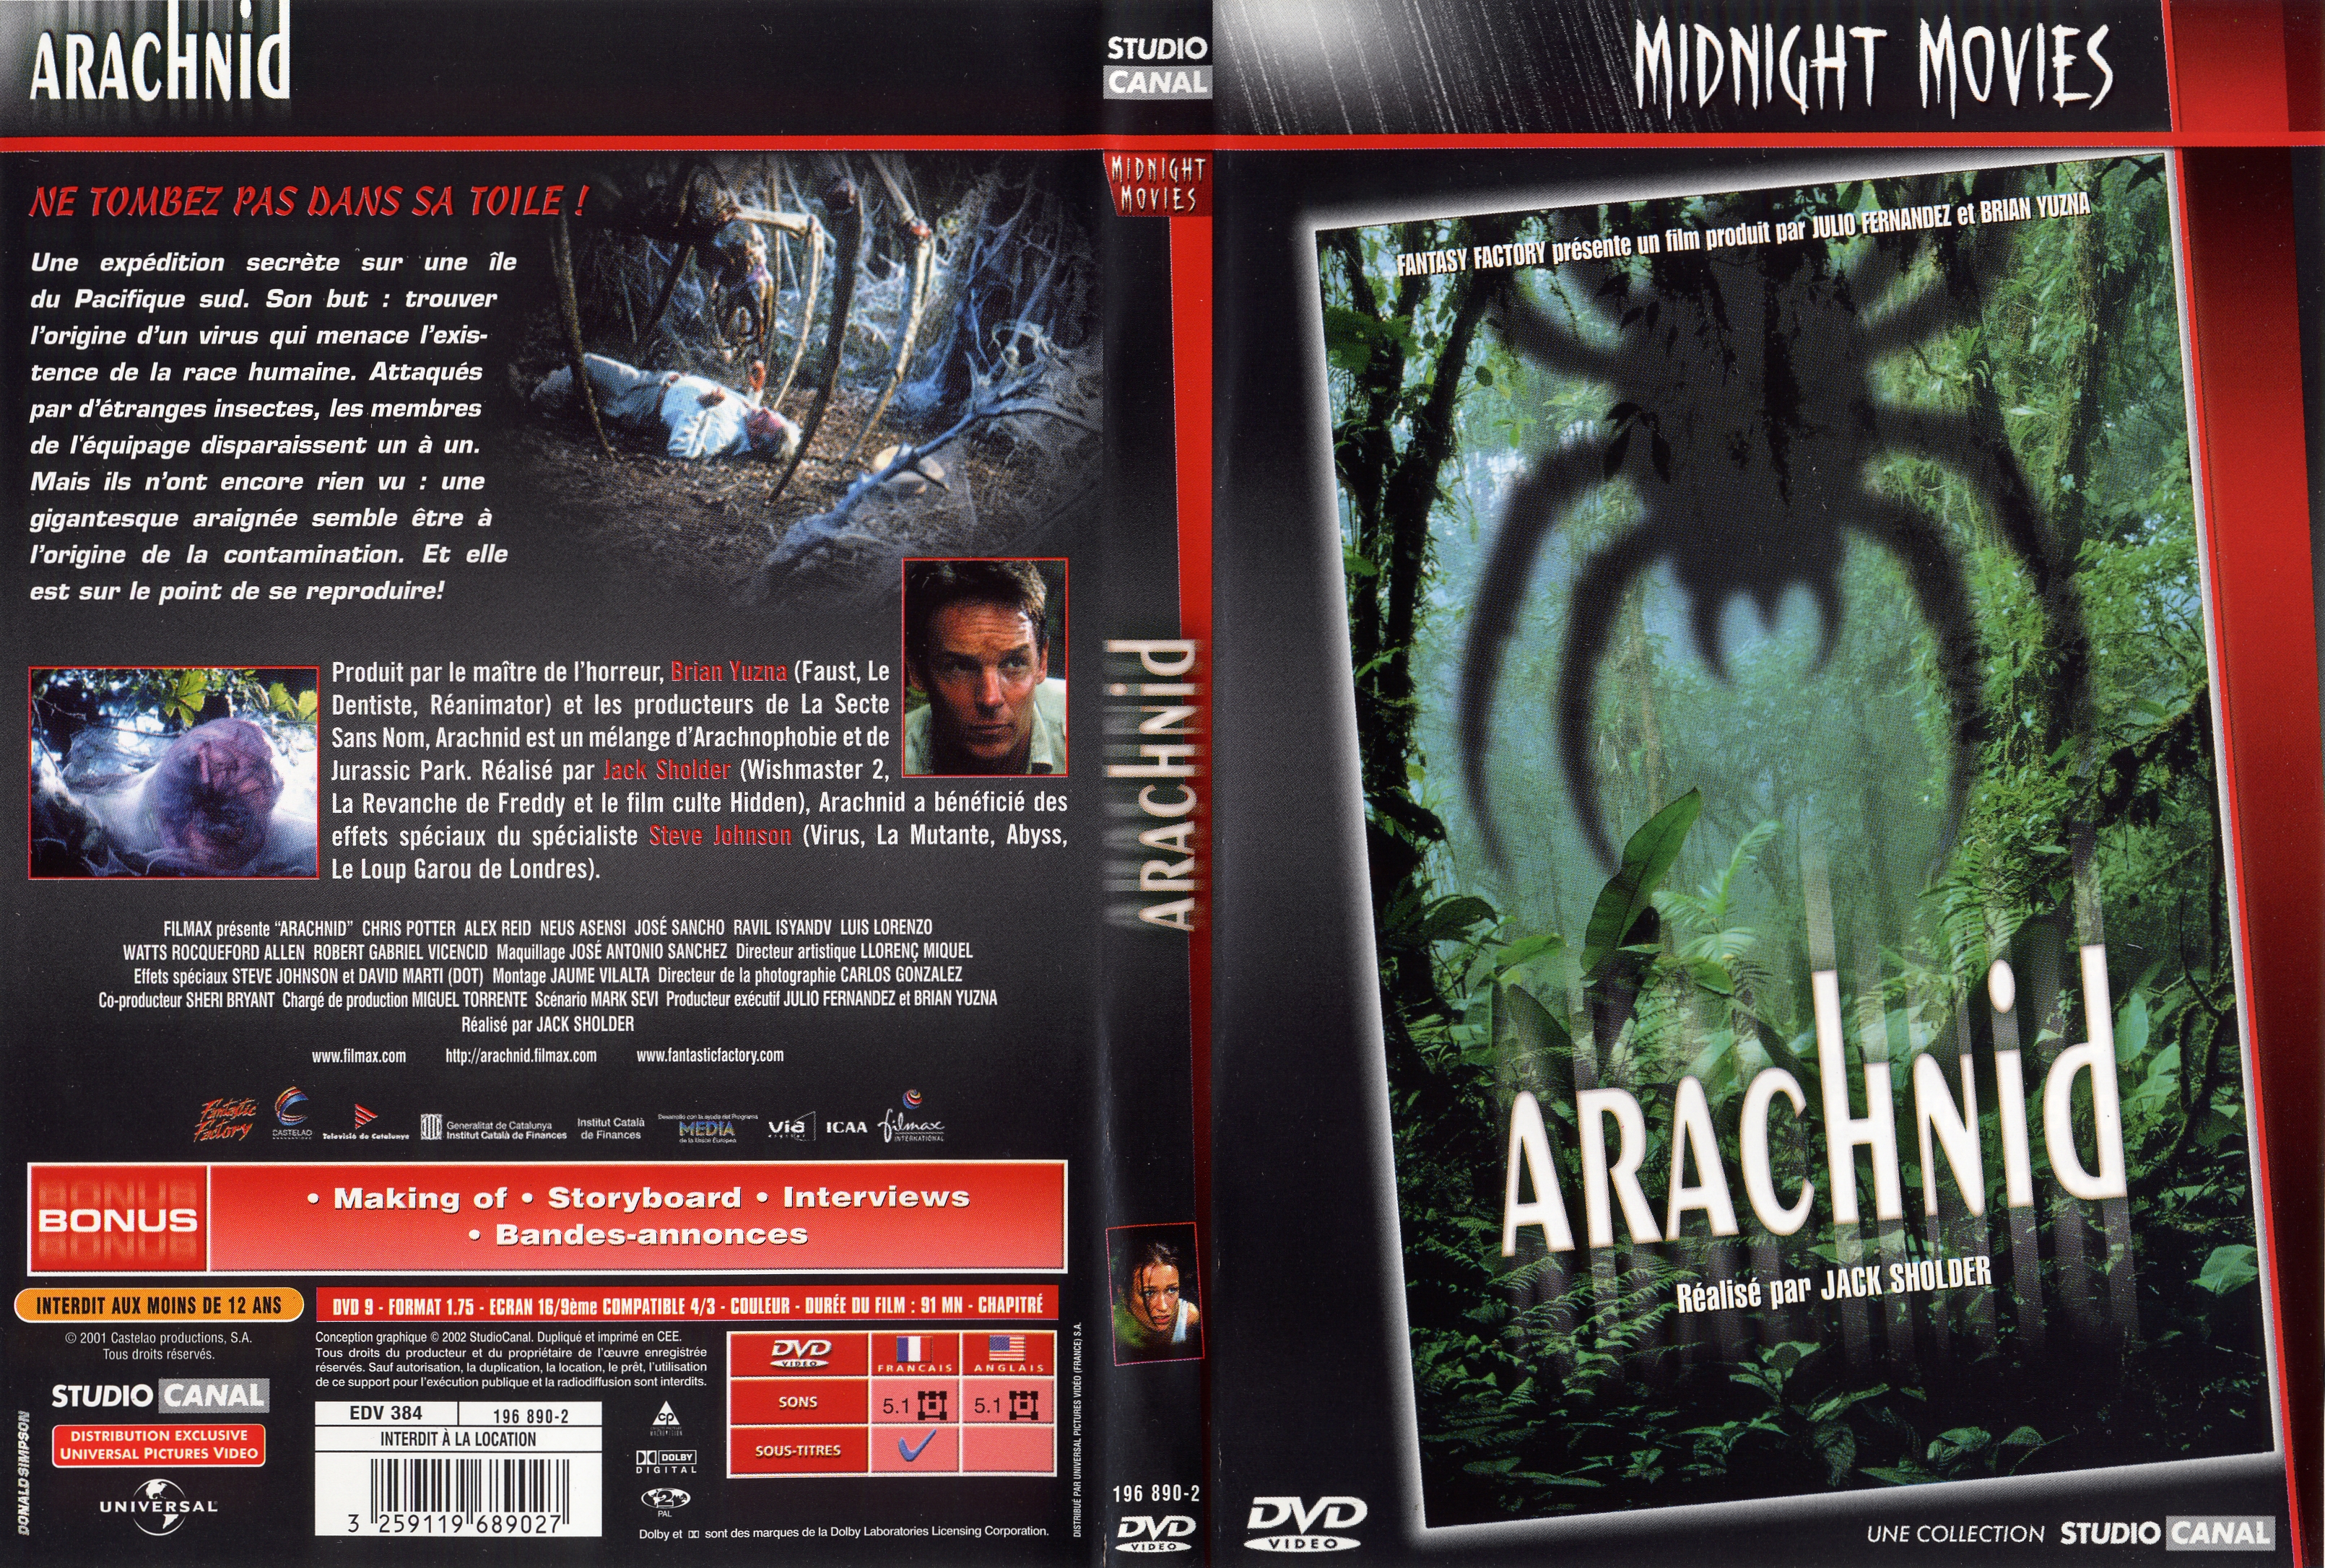 Jaquette DVD Arachnid v2